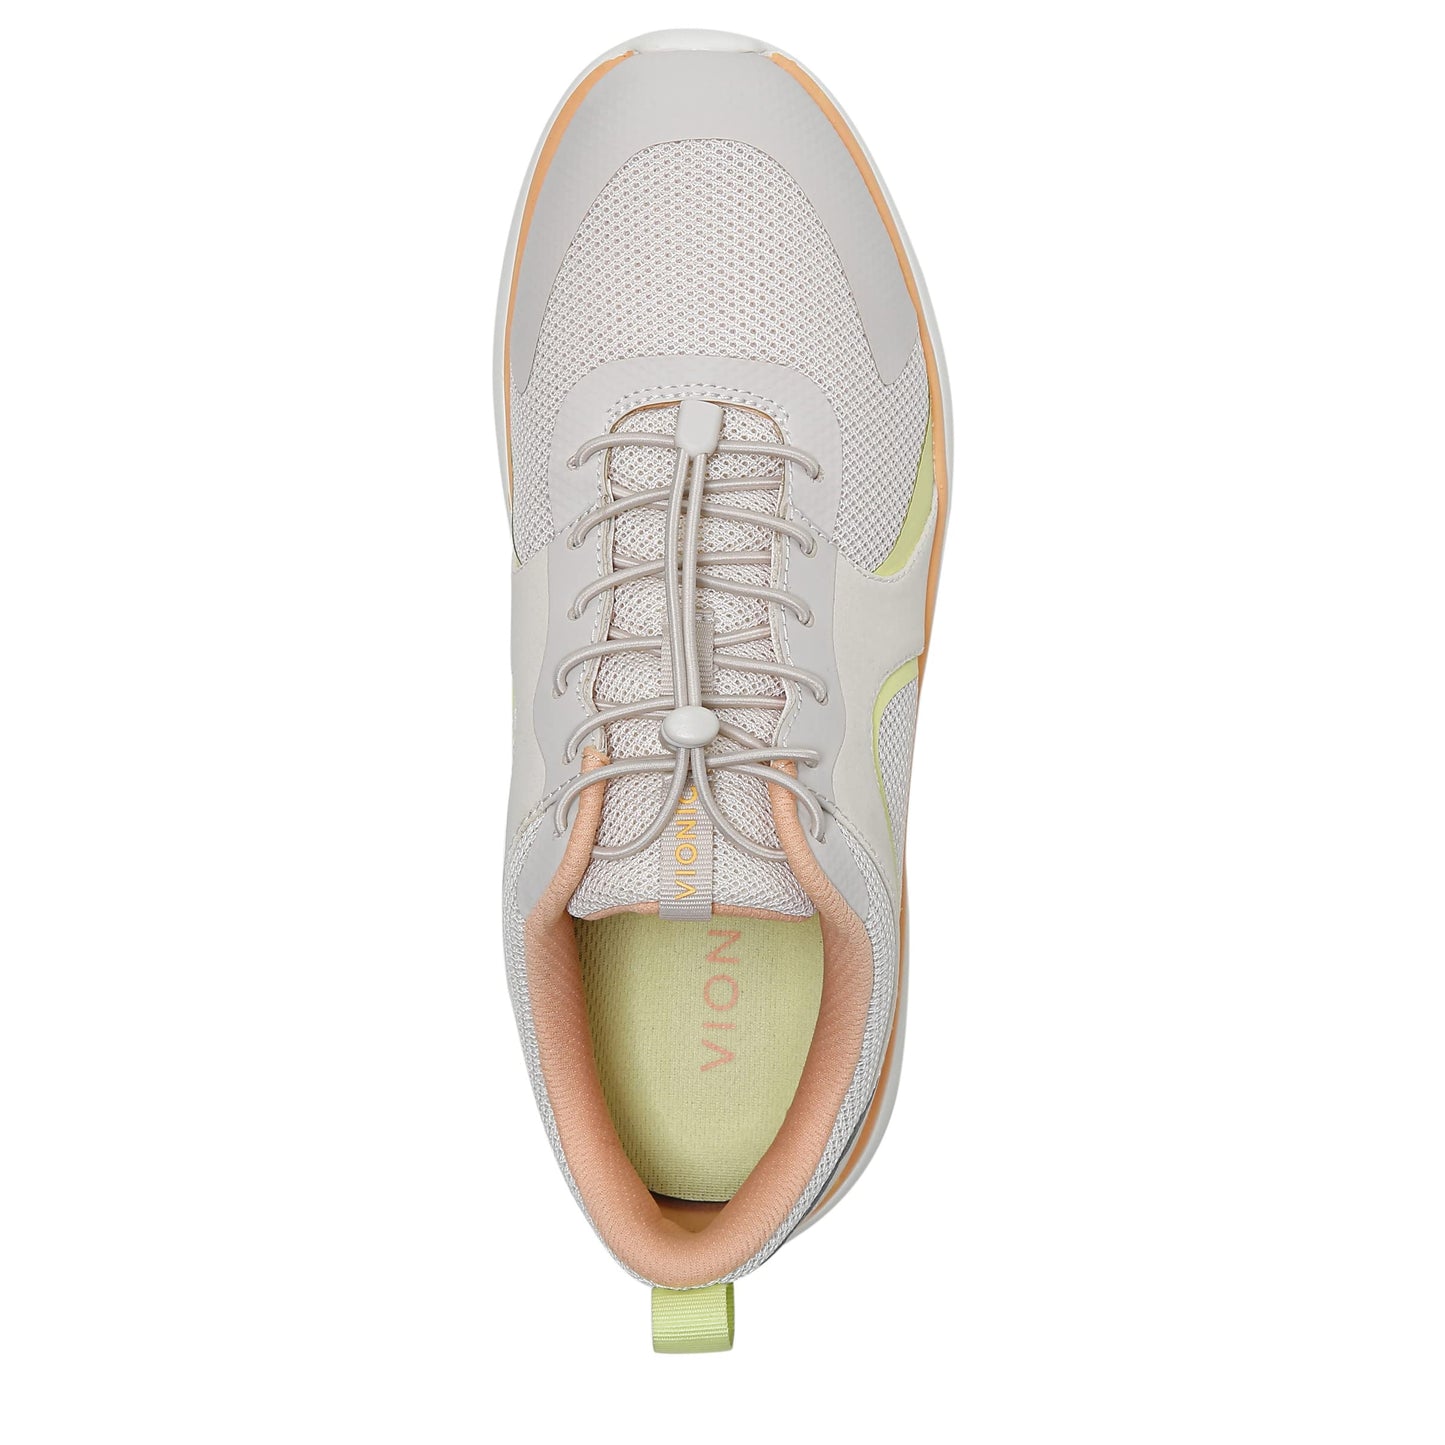 Vionic Olessa Women's Supportive Walking/Athletic Shoe, Cream/Apricot, 10